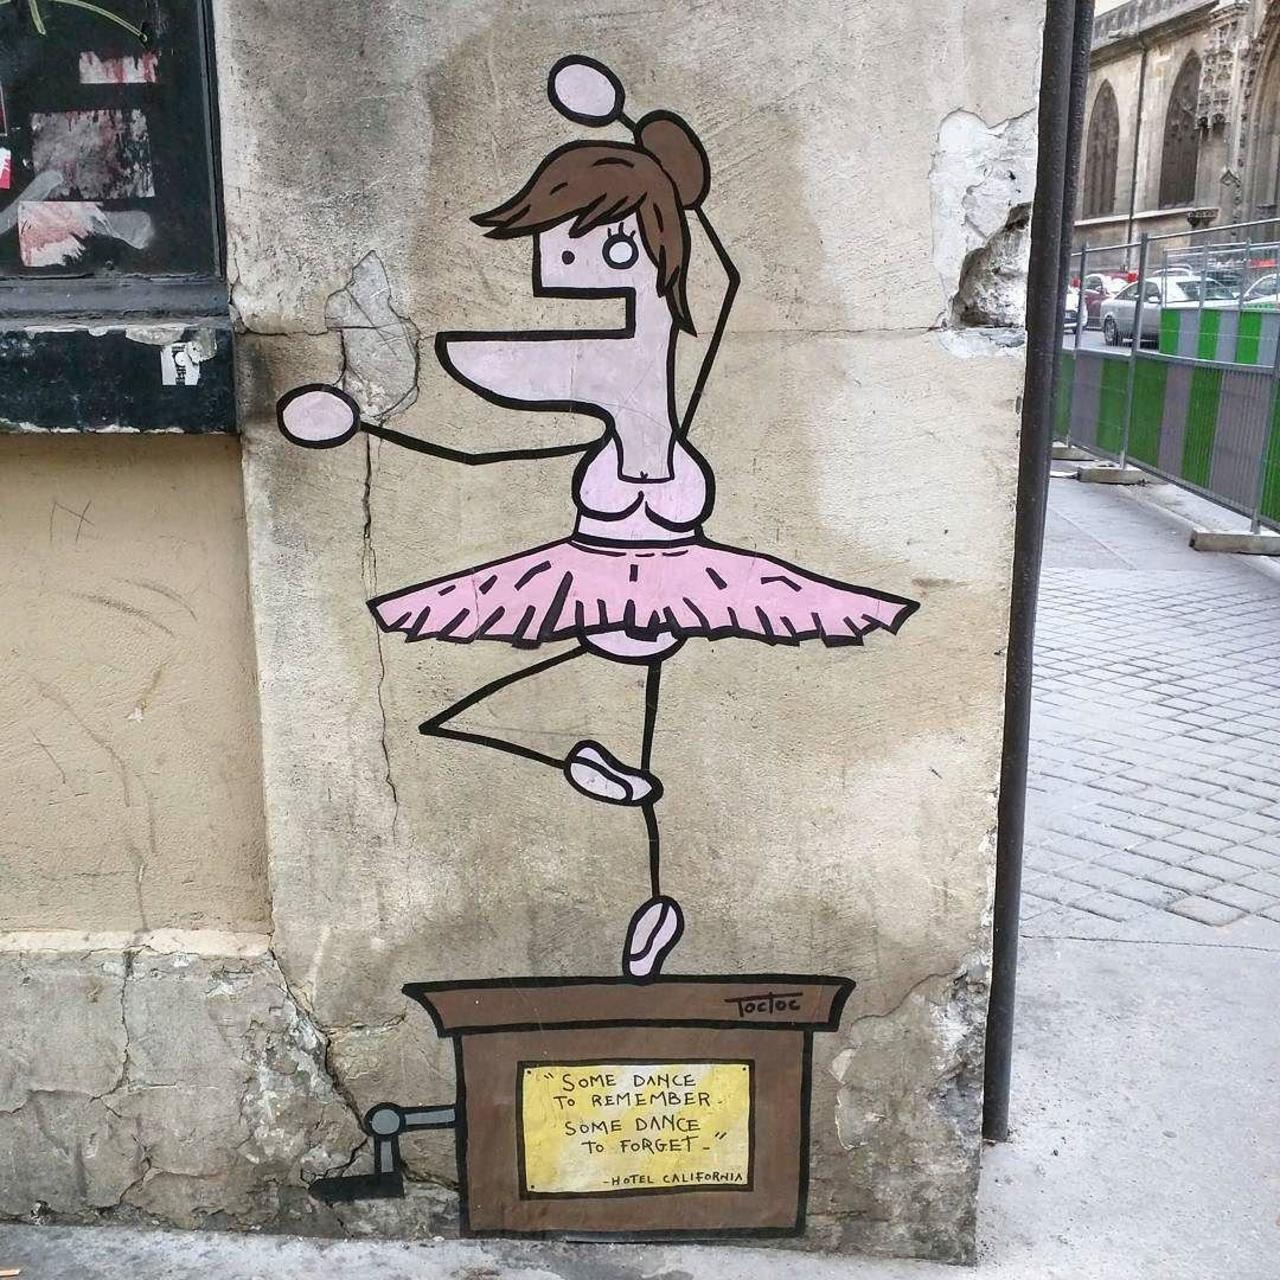 circumjacent_fr: #Paris #graffiti photo by alphaquadra http://ift.tt/1QGDhkW #StreetArt http://t.co/3FnMHRMRlO